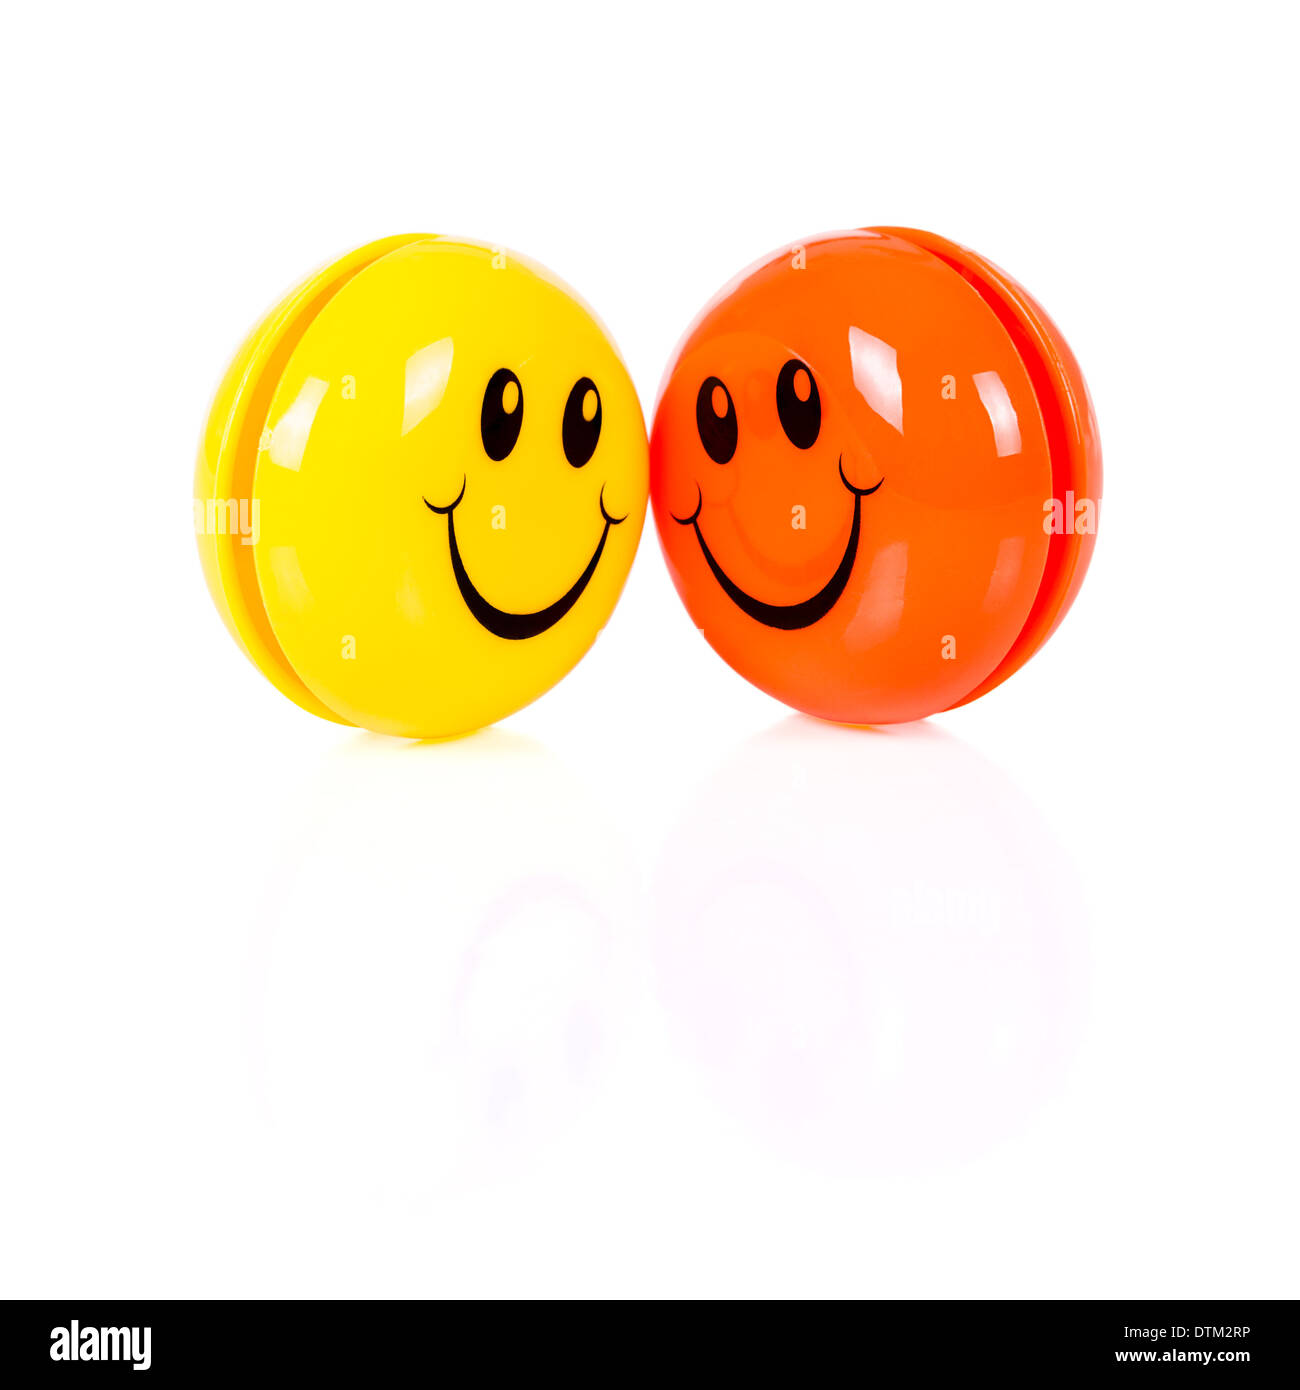 Yellow and orange smileys isolated on white background Stock Photo